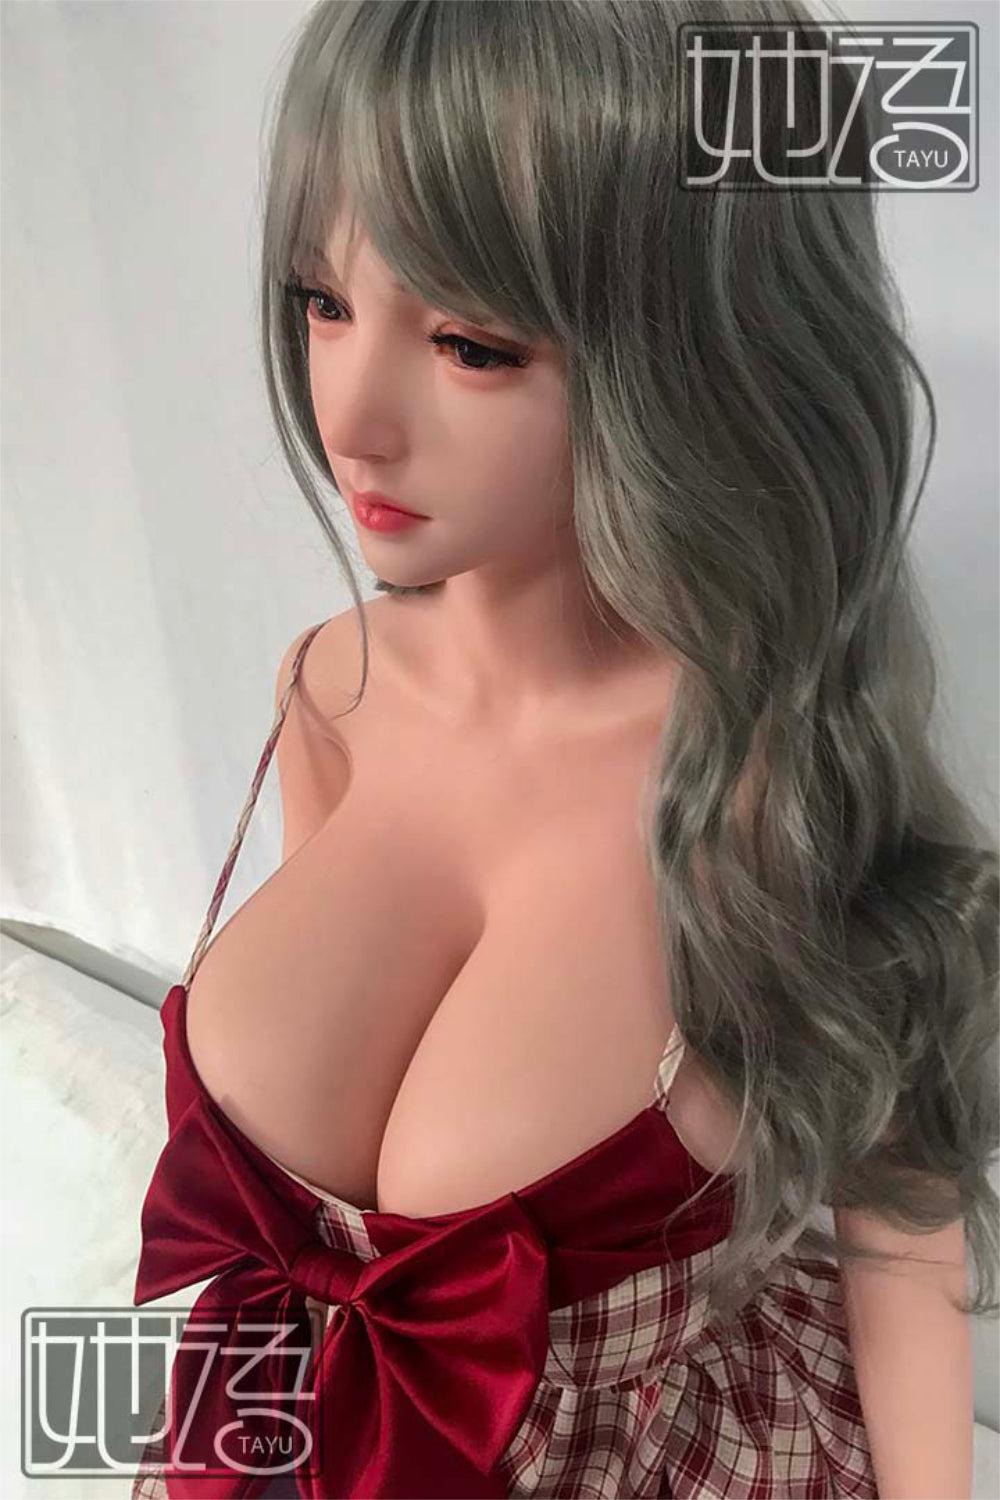 TAYU Doll 155 cm I Silicone - NaiMei - V1 | Buy Sex Dolls at DOLLS ACTUALLY